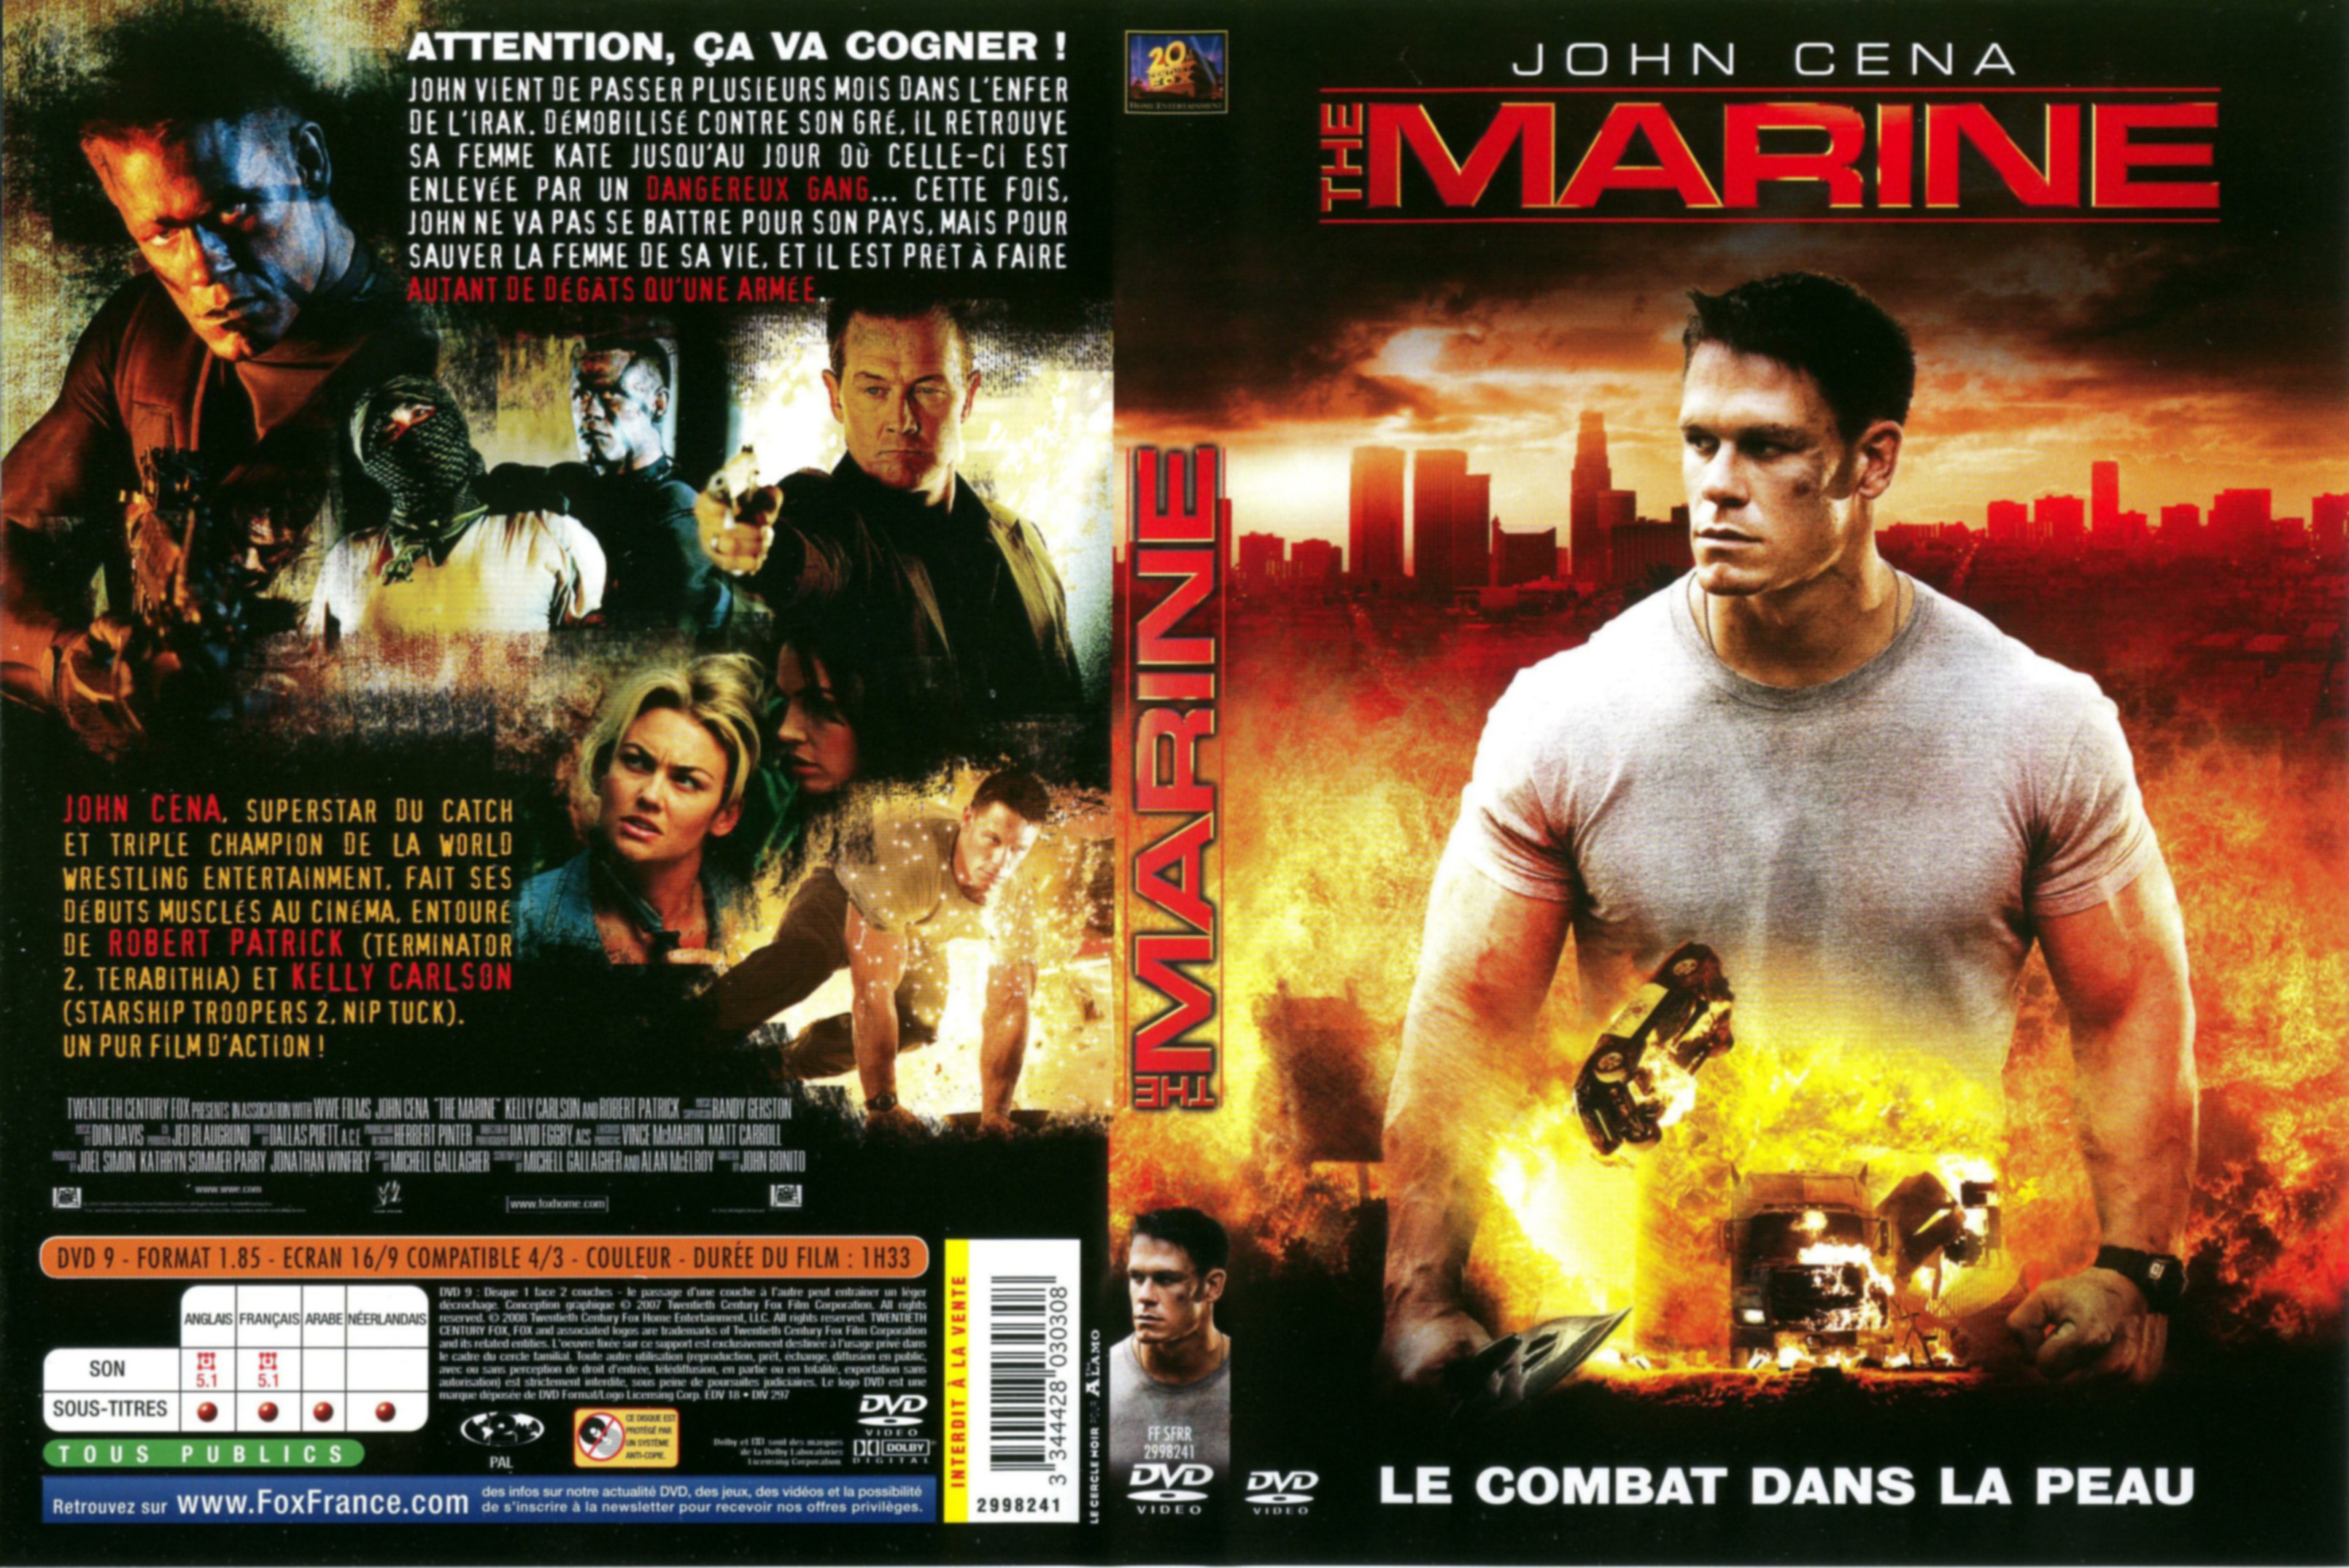 Jaquette DVD The marine v2